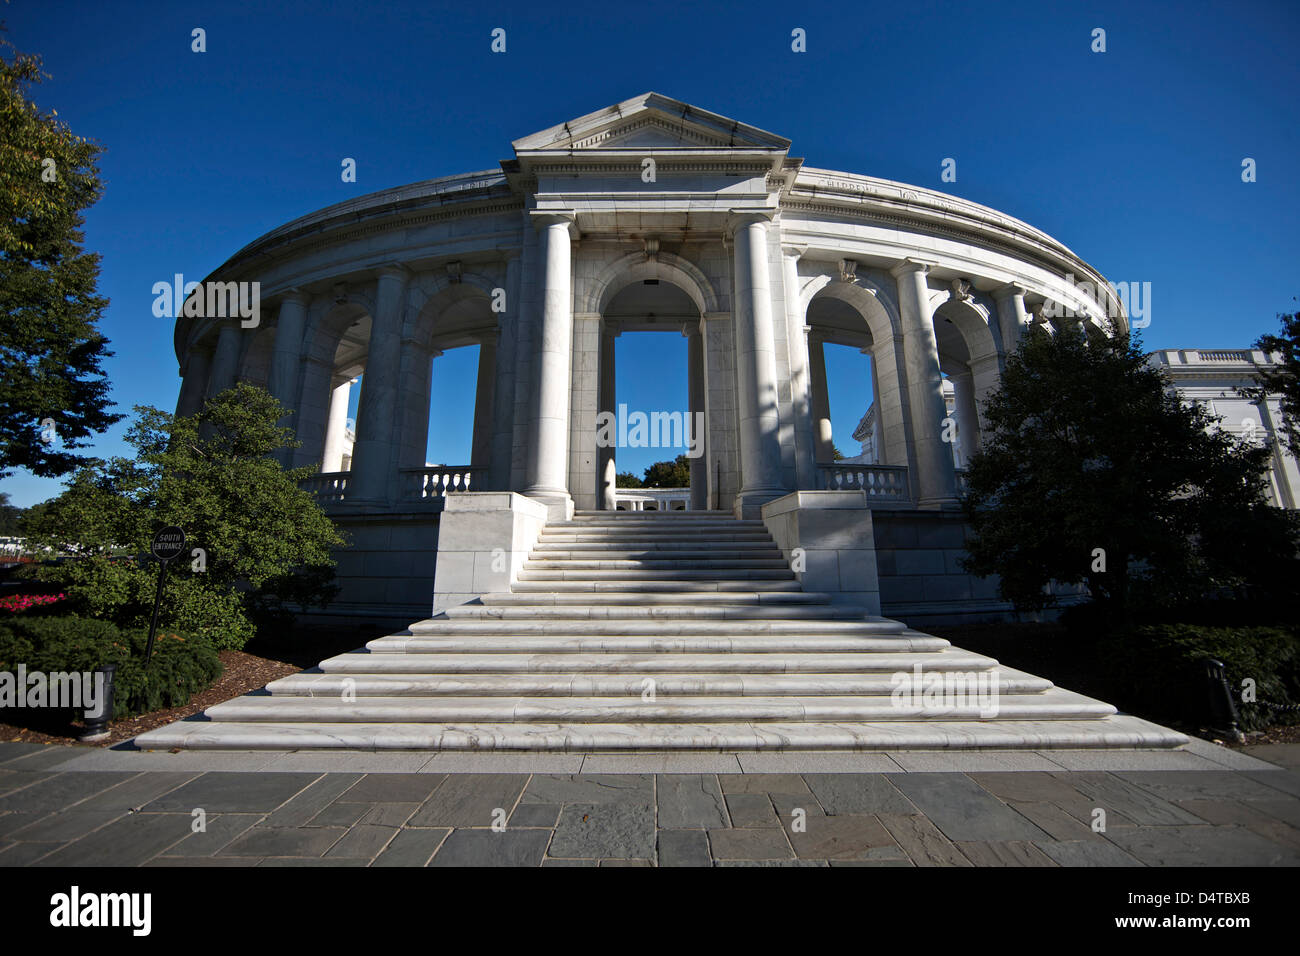 Das Arlington Memorial Amphitheater auf dem Nationalfriedhof Arlington, Arlington, Virginia, USA. Stockfoto